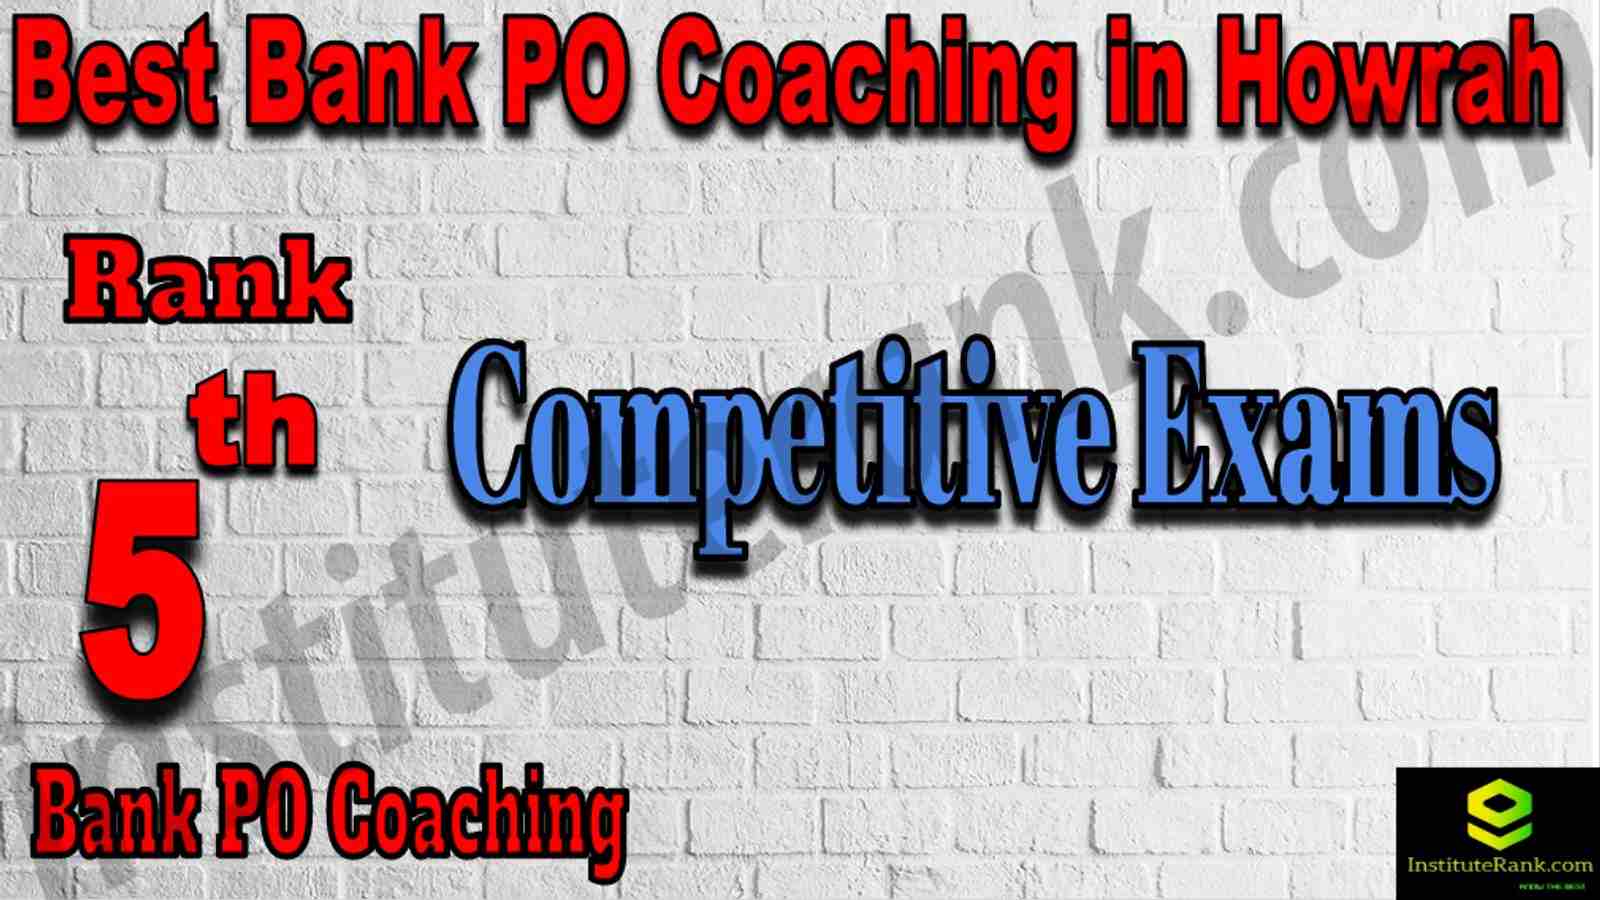 5th Best Bank PO Coaching in Howrah